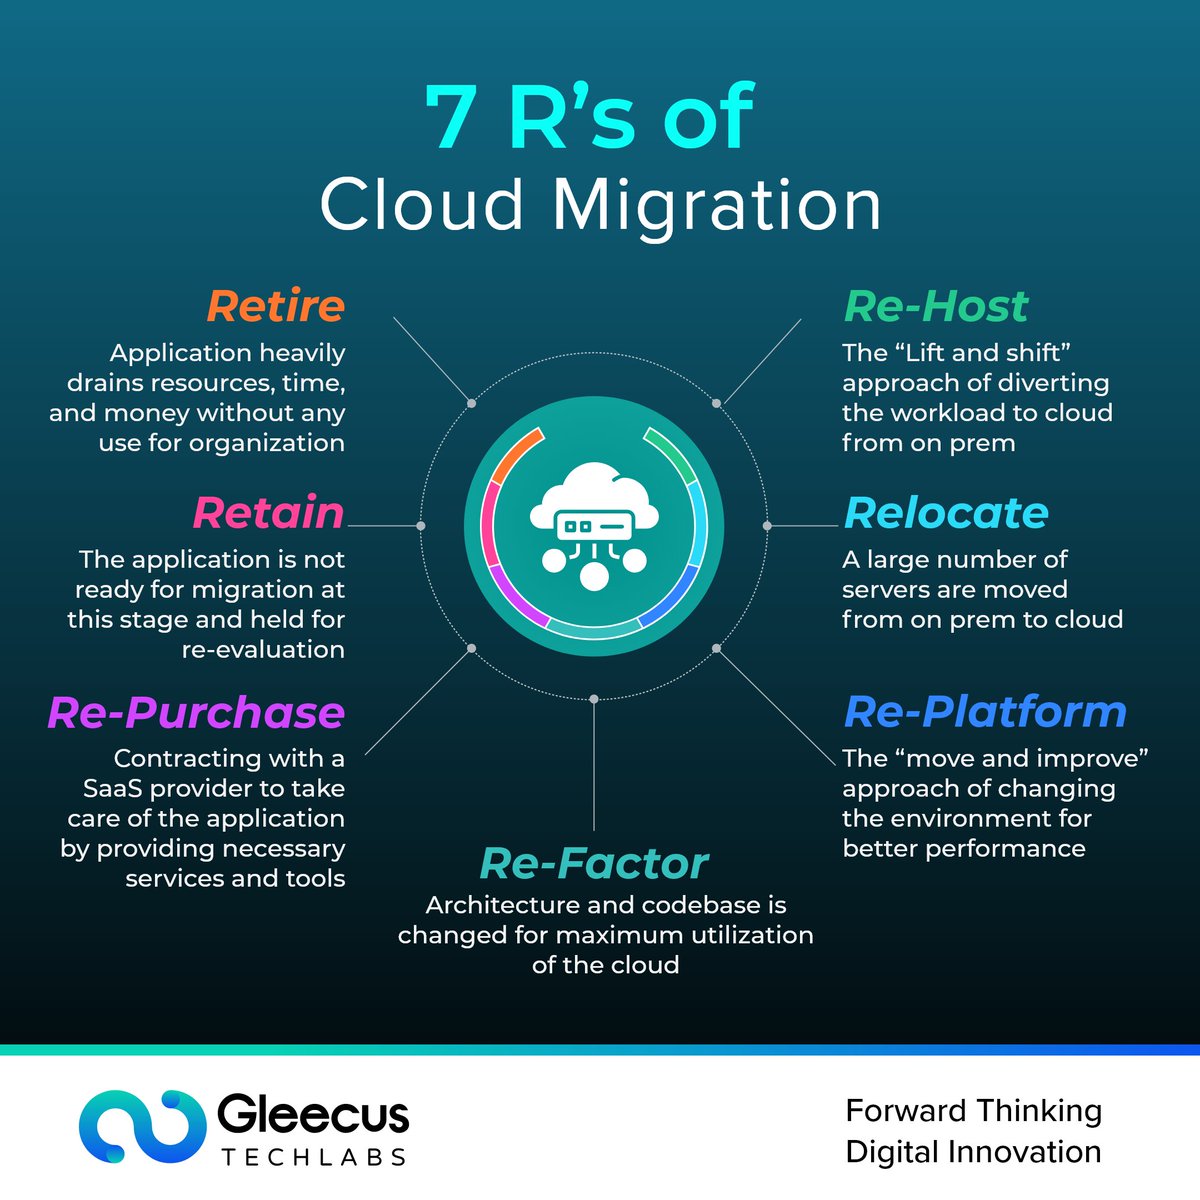 What models your cloud migration strategy? 

#CloudMigration #DigitalTransformation   #DataManagement  #InfrastructureMigration #CloudAdoption #MigrationStrategy #DataSecurity #CloudReadiness #ApplicationMigration #HybridCloud #DataCenterMigration #CloudStrategy